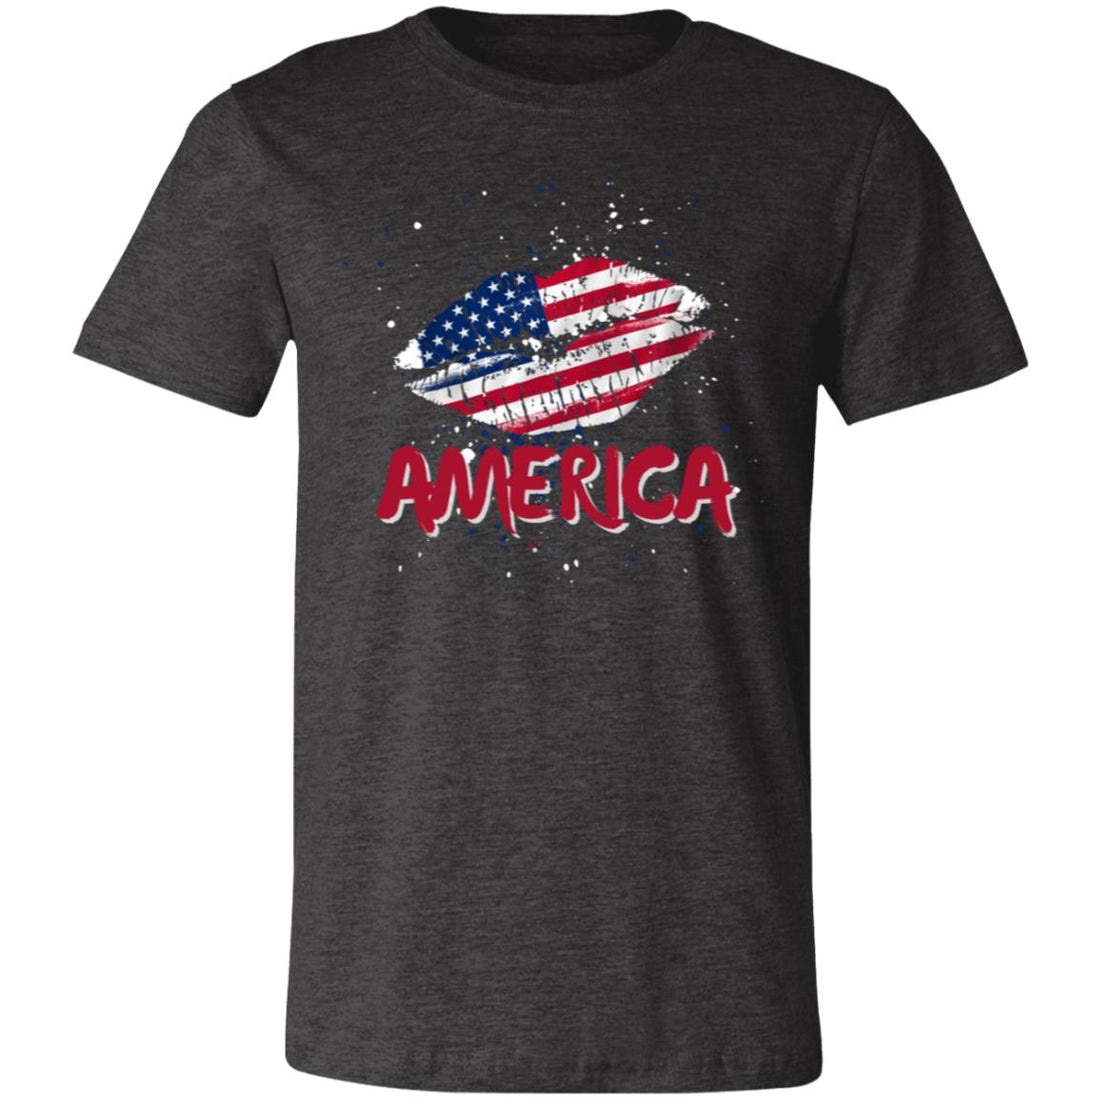 America Lips T-Shirt - T-Shirts - Positively Sassy - America Lips T-Shirt